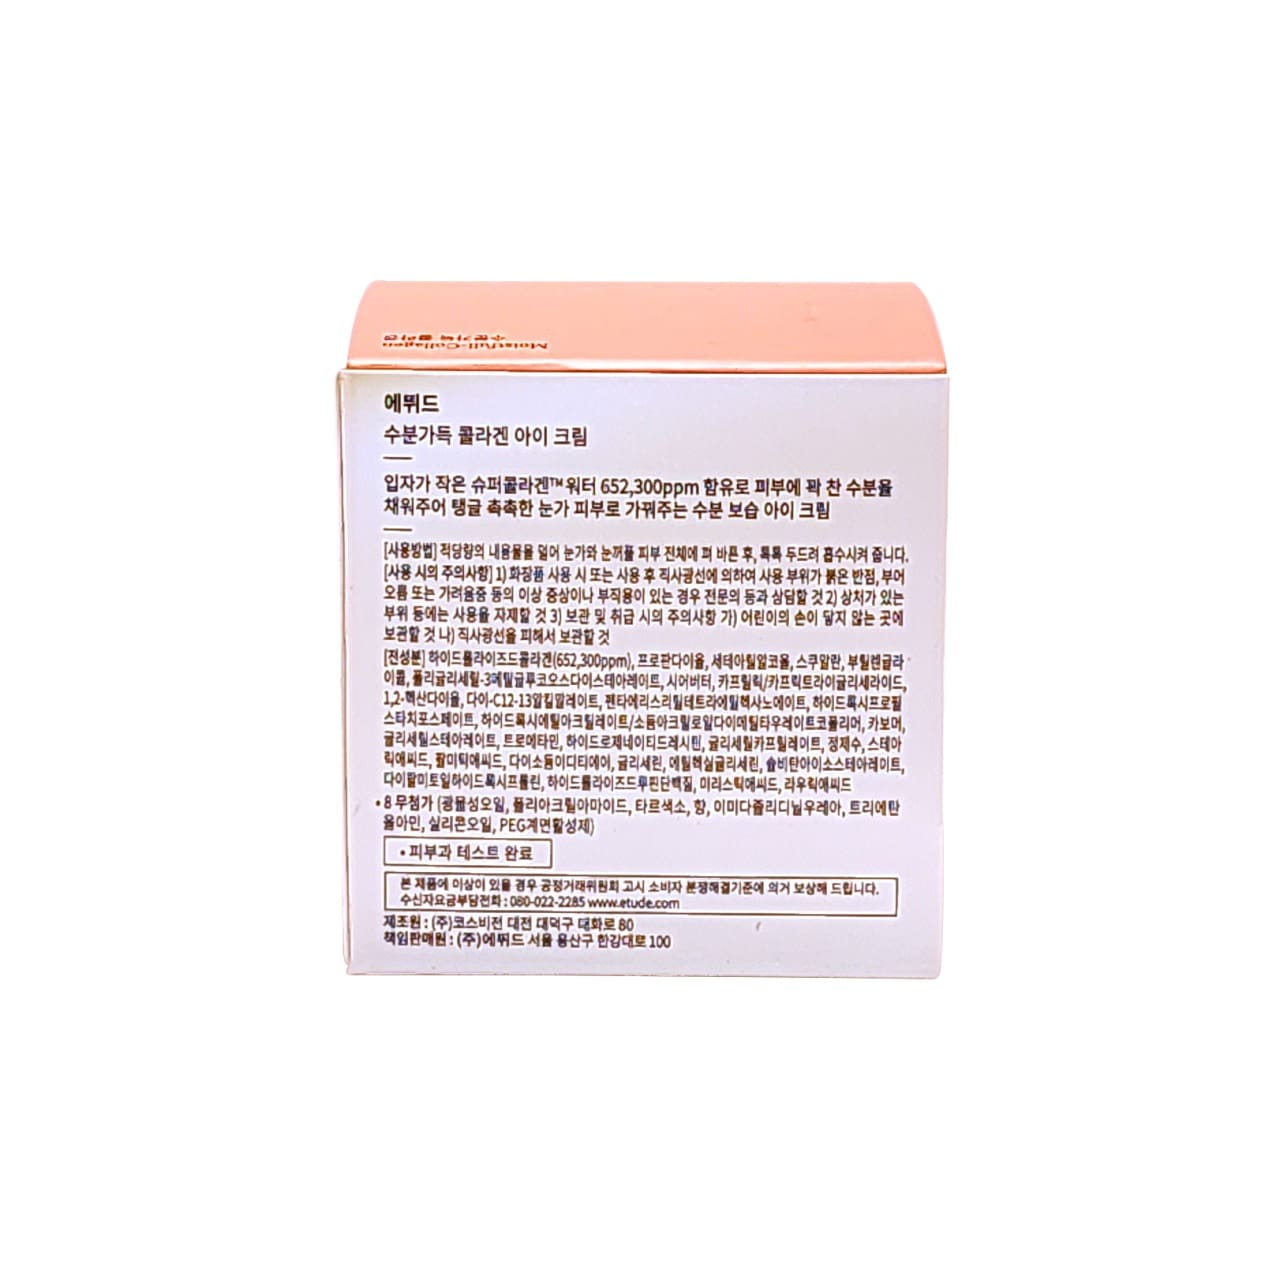 Description, directions, cautions, ingredients for Etude House Moistfull Collagen Eye Cream (28 mL) in Korean